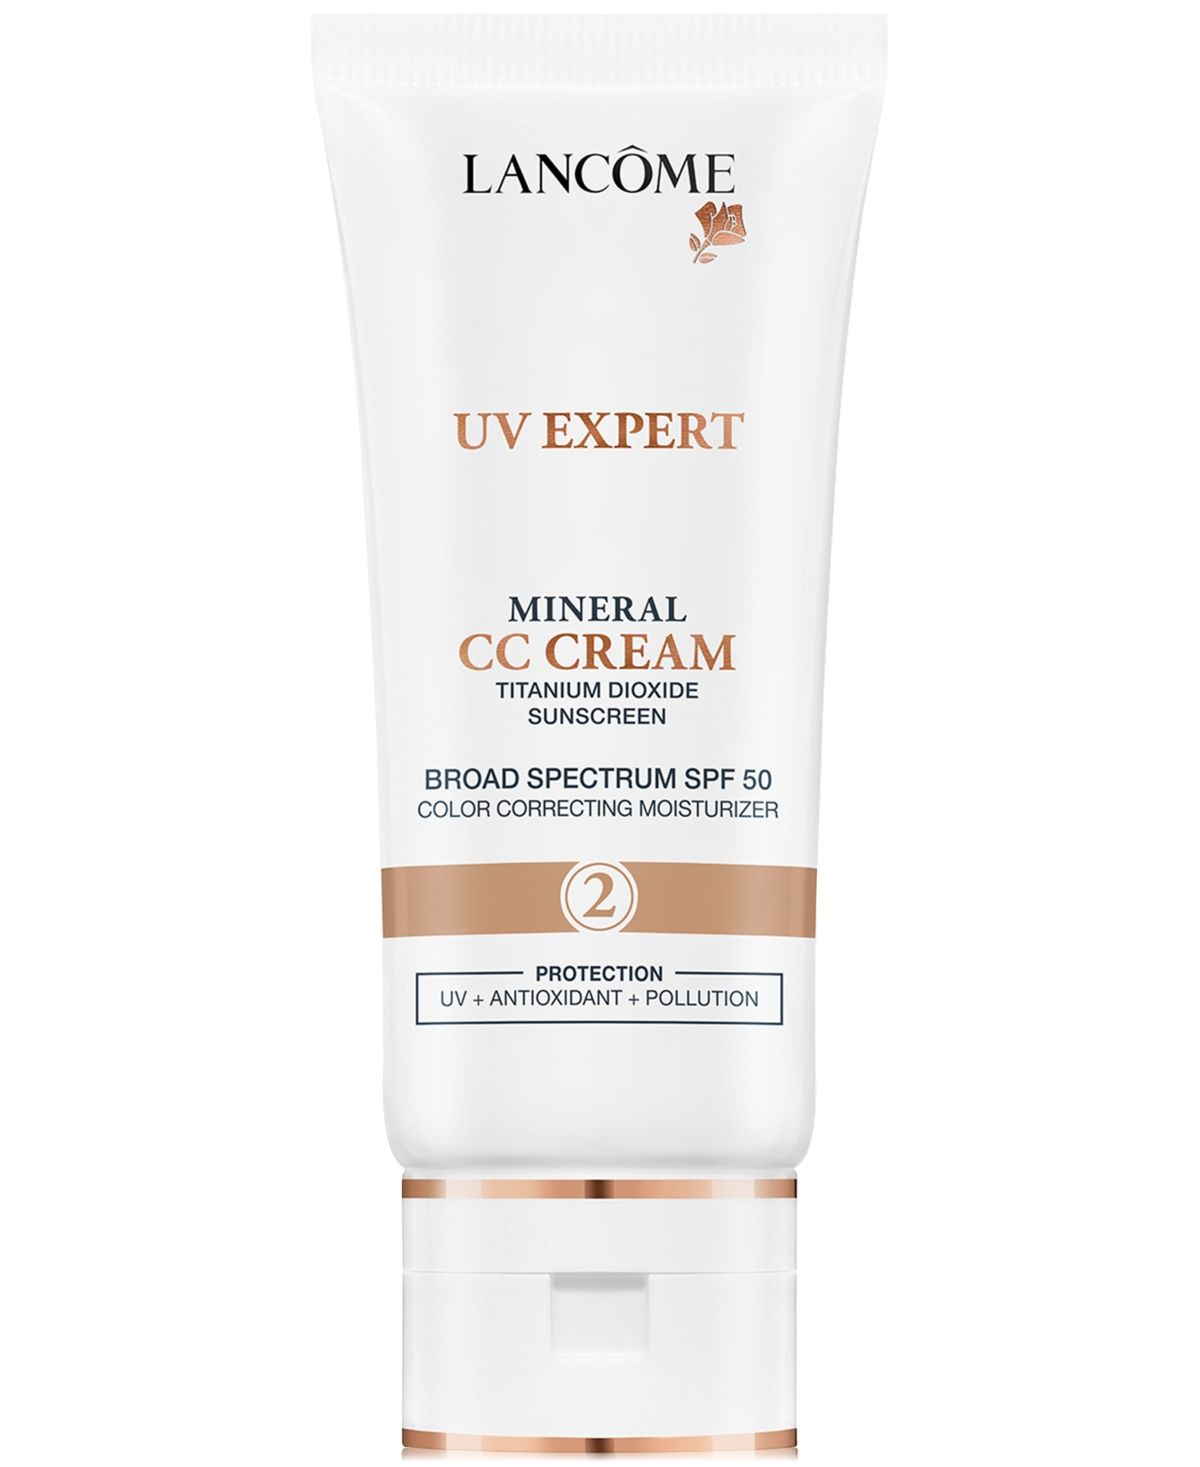 Lancome Uv Expert Mineral Cc Cream | Macys (US)